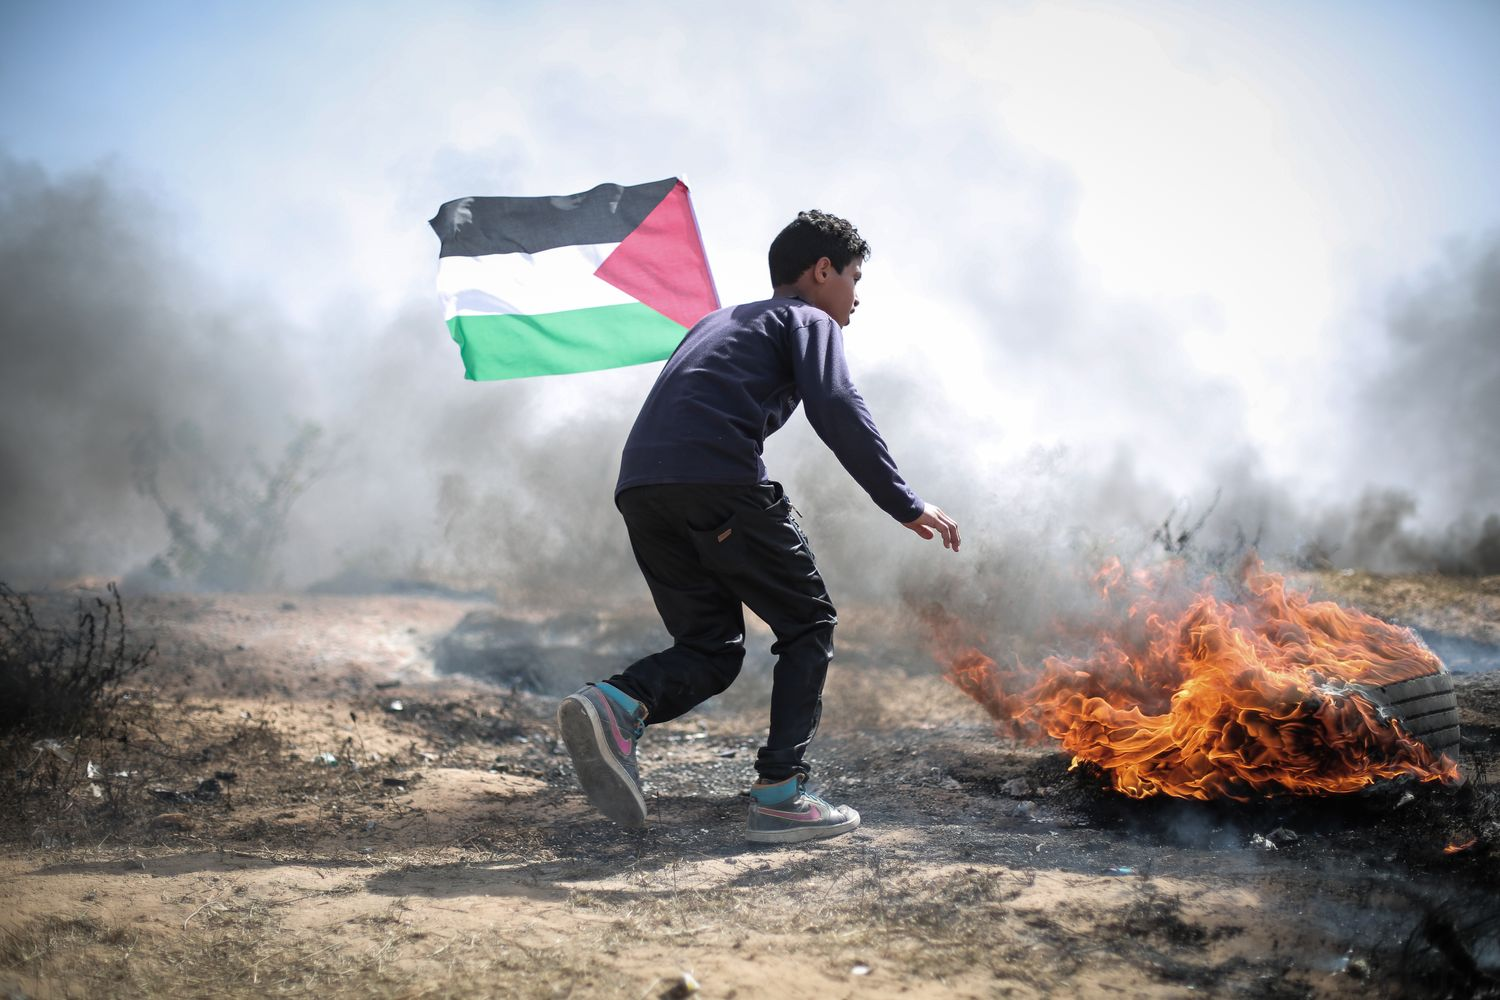 University demonstrations for Palestine